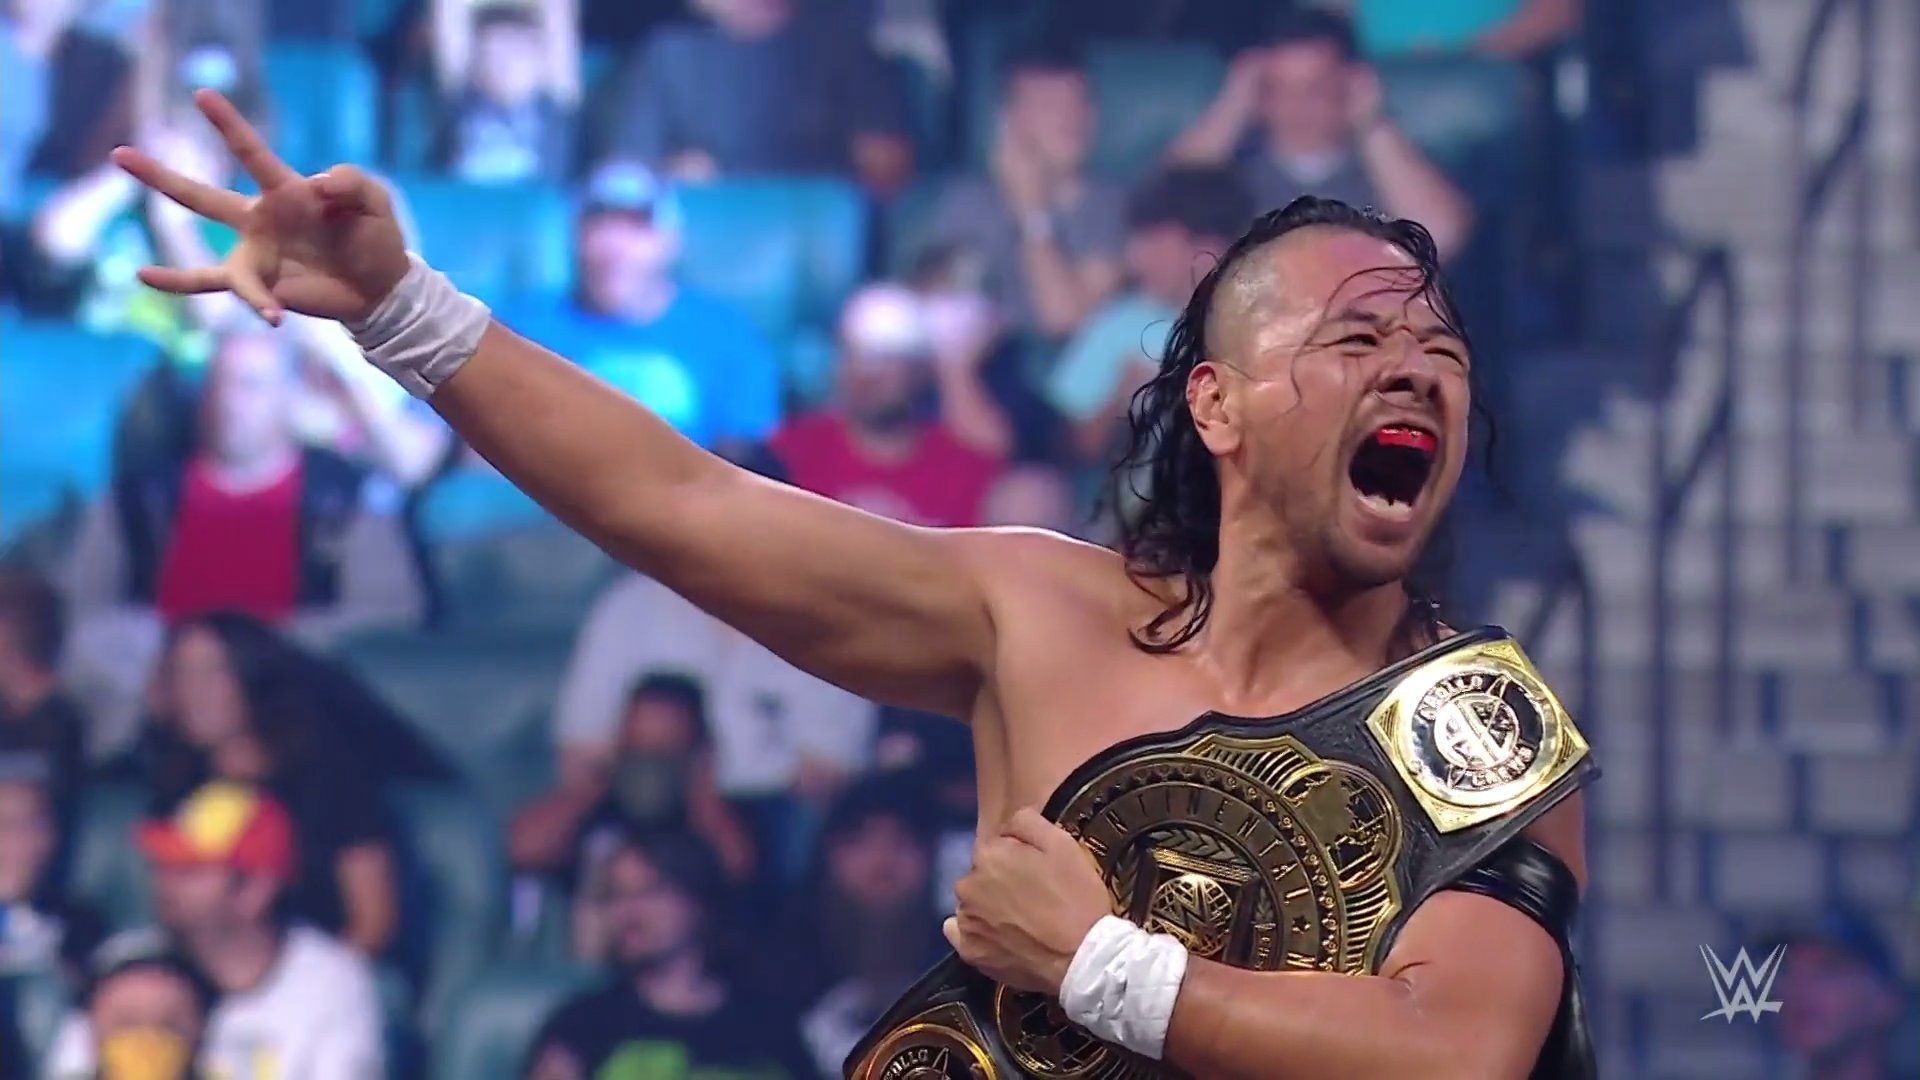 Nakamura as the Intercontinental Champion